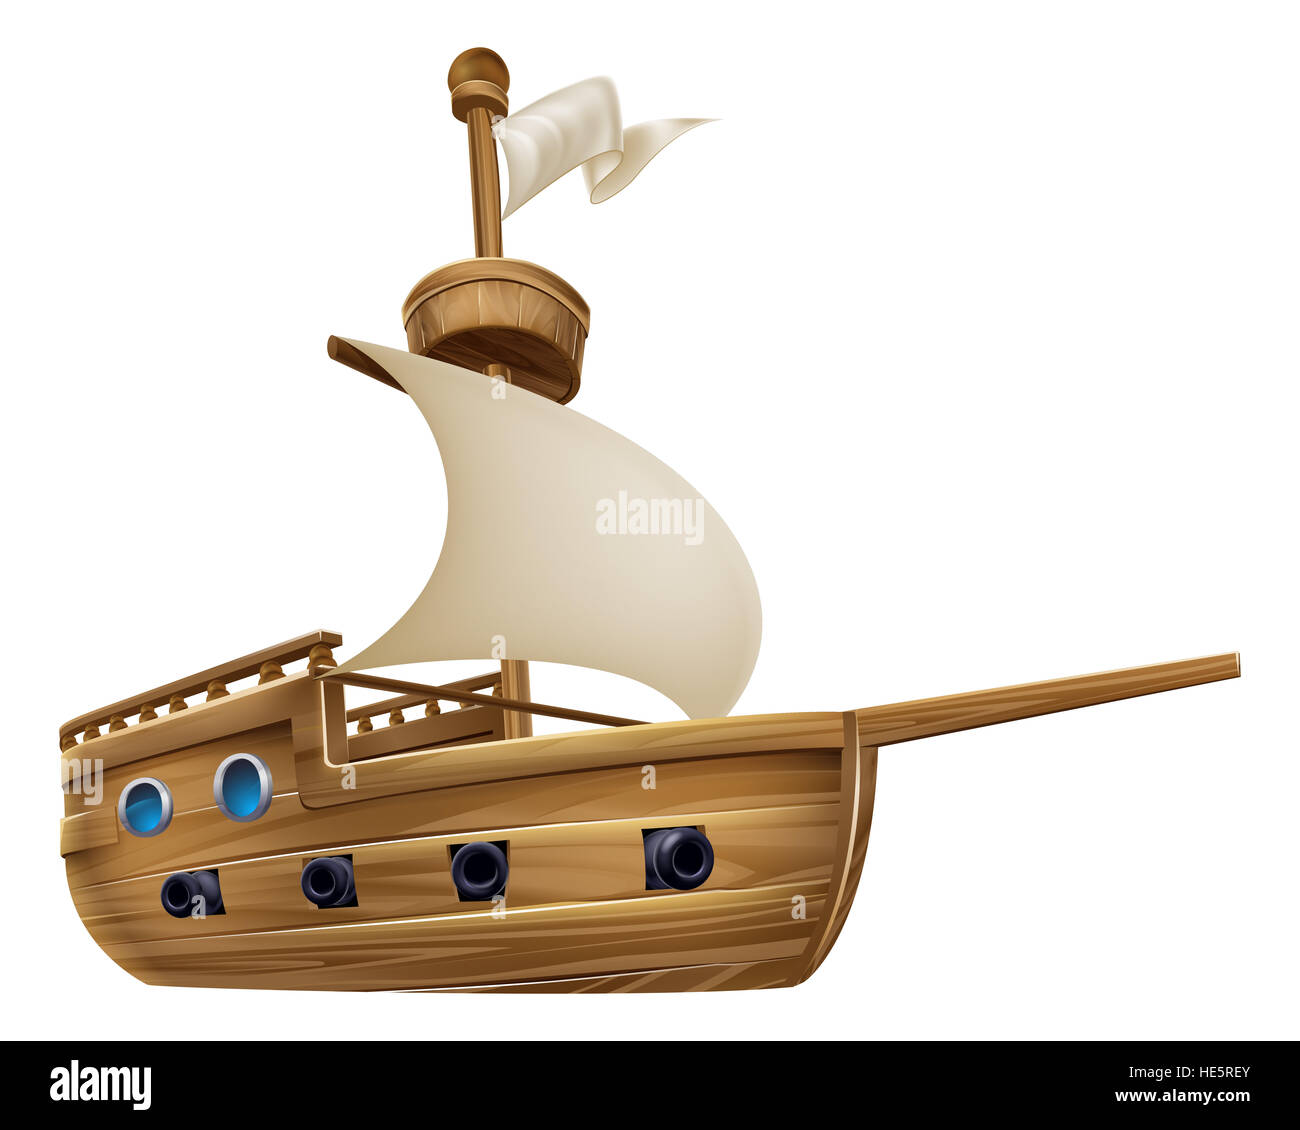 An illustration of a cartoon sailing ship boat Stock Photo